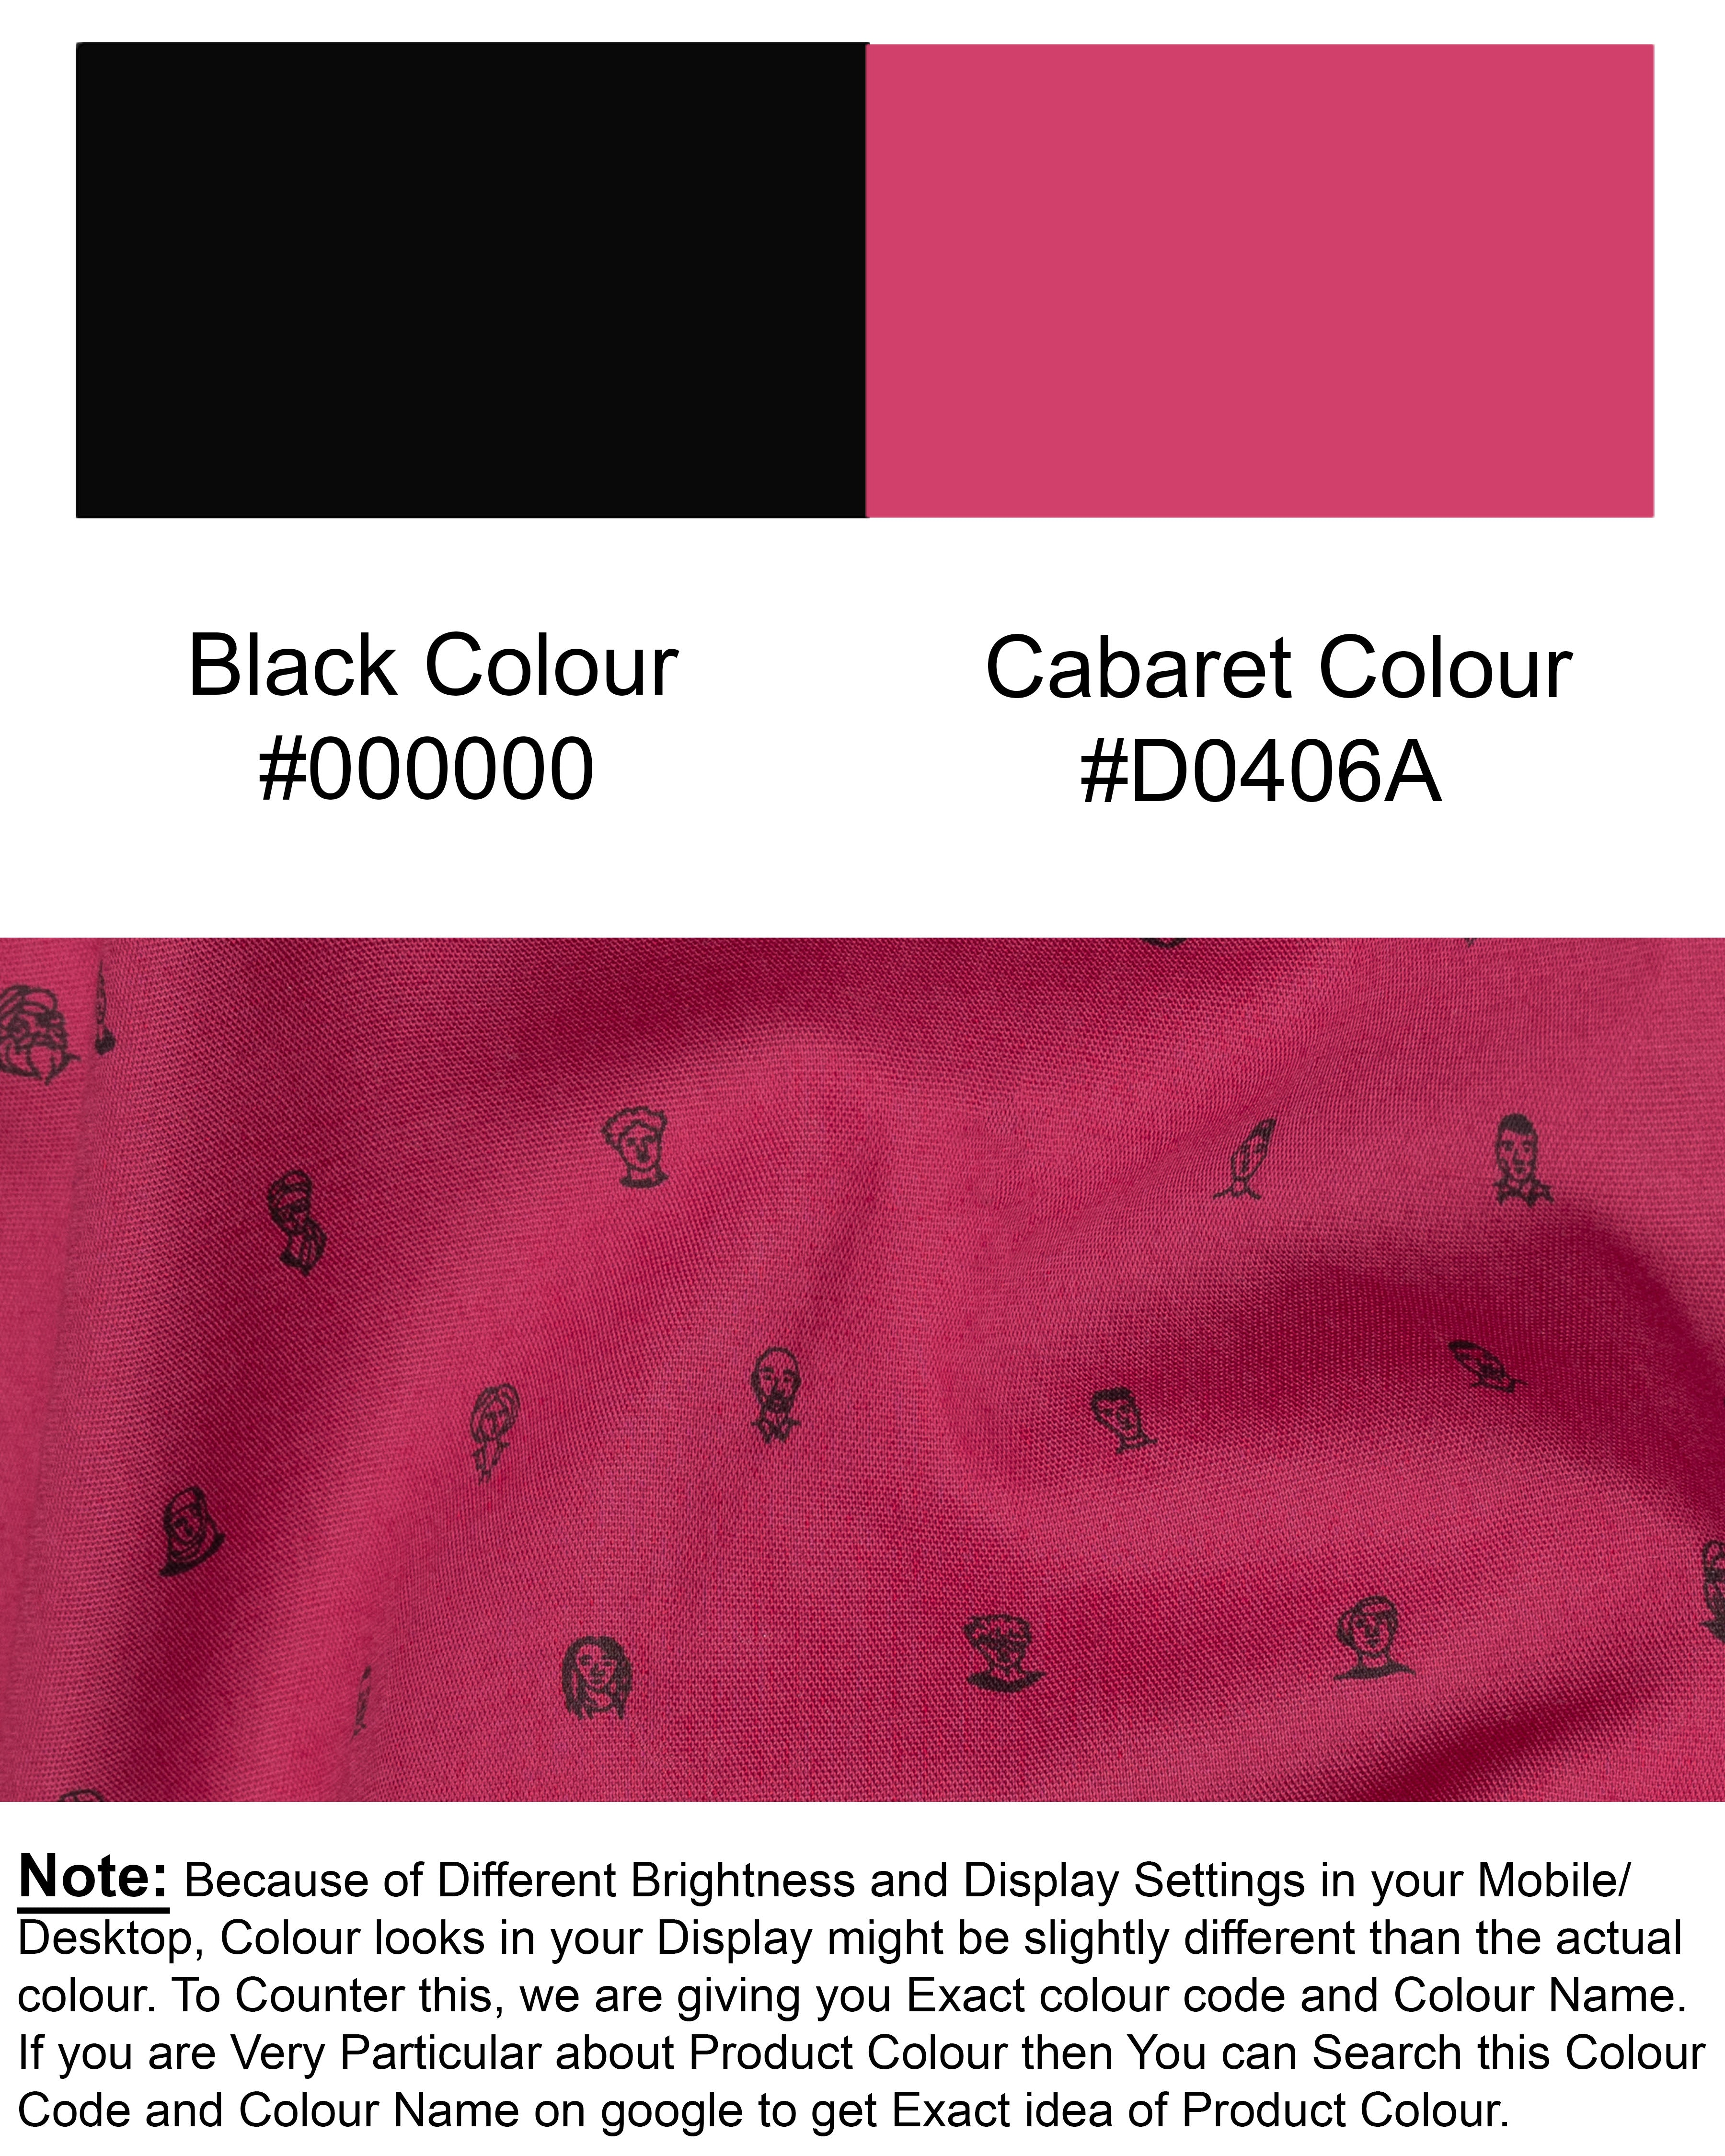 Cabaret Red People Printed Royal Oxford Shirt 6094-BD-BLK-38, 6094-BD-BLK-H-38, 6094-BD-BLK-39, 6094-BD-BLK-H-39, 6094-BD-BLK-40, 6094-BD-BLK-H-40, 6094-BD-BLK-42, 6094-BD-BLK-H-42, 6094-BD-BLK-44, 6094-BD-BLK-H-44, 6094-BD-BLK-46, 6094-BD-BLK-H-46, 6094-BD-BLK-48, 6094-BD-BLK-H-48, 6094-BD-BLK-50, 6094-BD-BLK-H-50, 6094-BD-BLK-52, 6094-BD-BLK-H-52